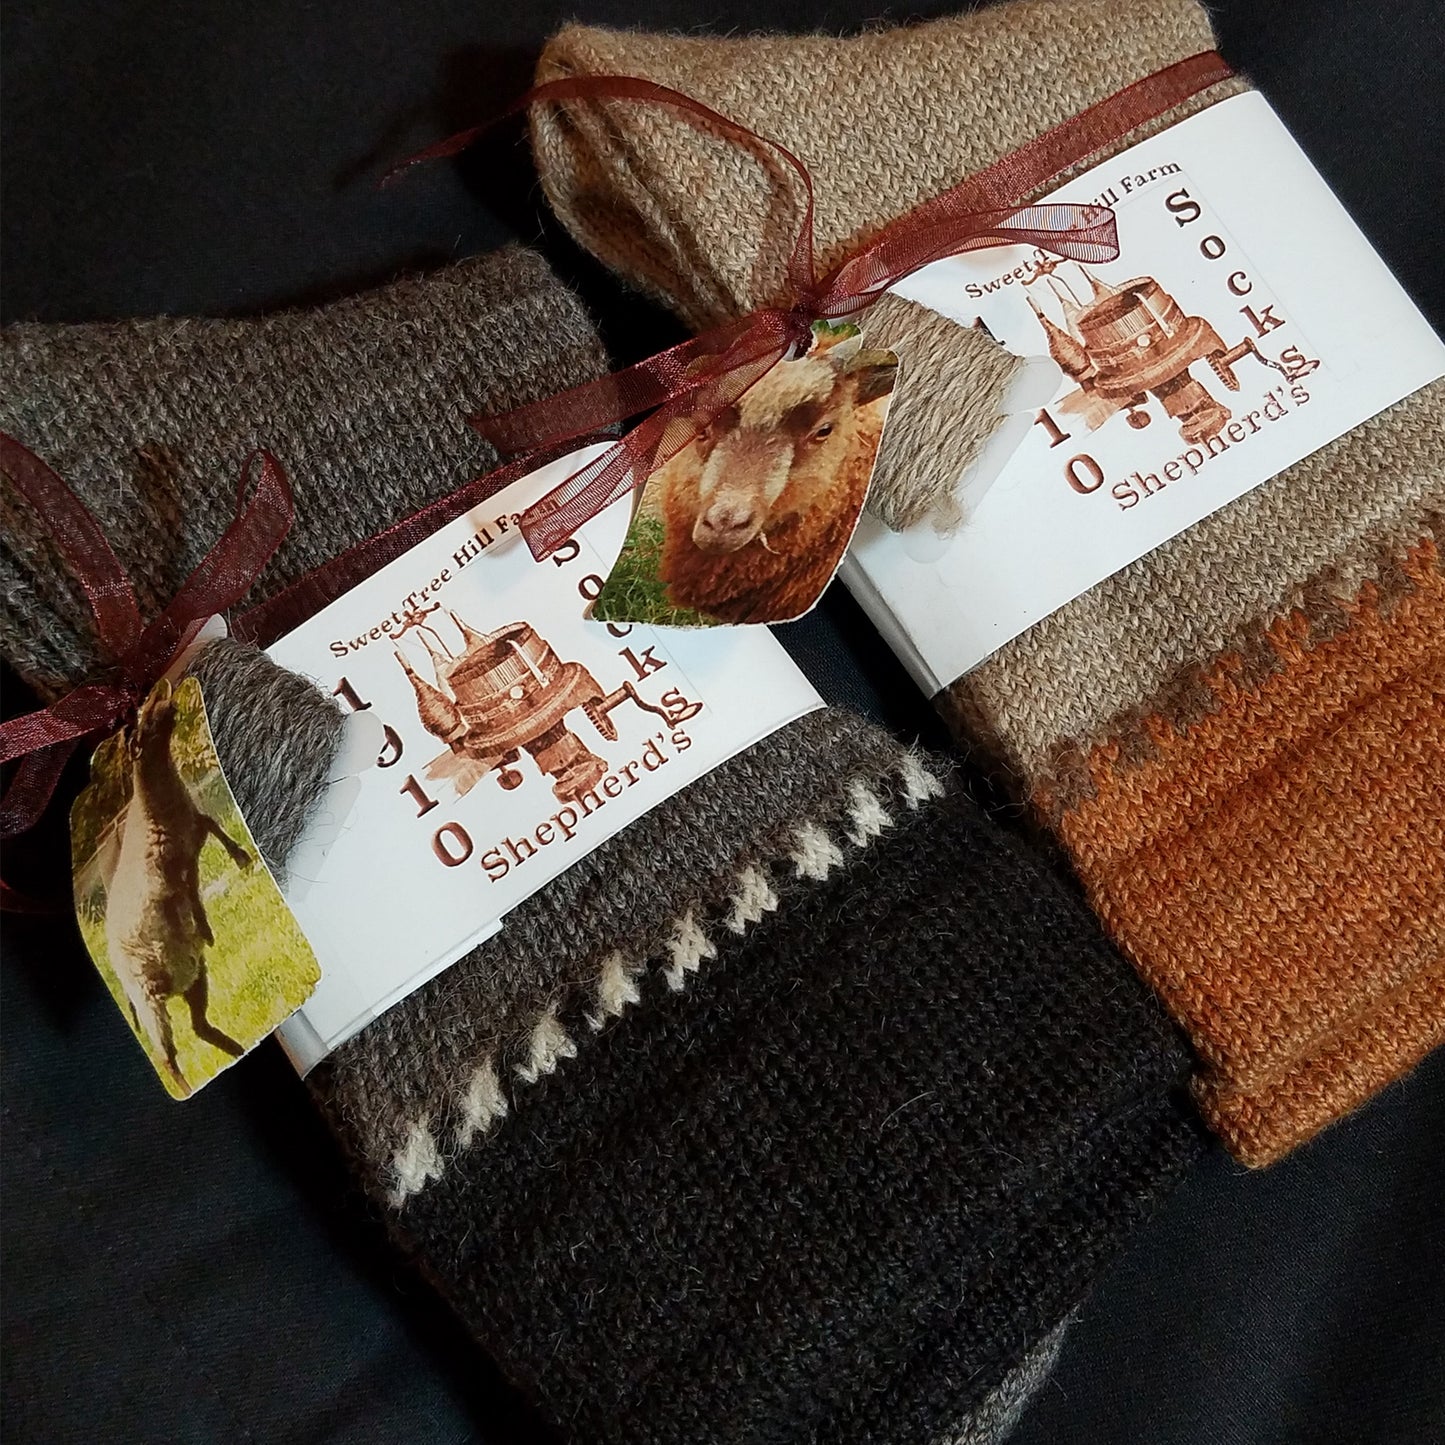 United States, Kathleen Oliver / Sweet Tree Hill Farm, Shepherd’s Socks in Shetland Wool: The Triangle Duo